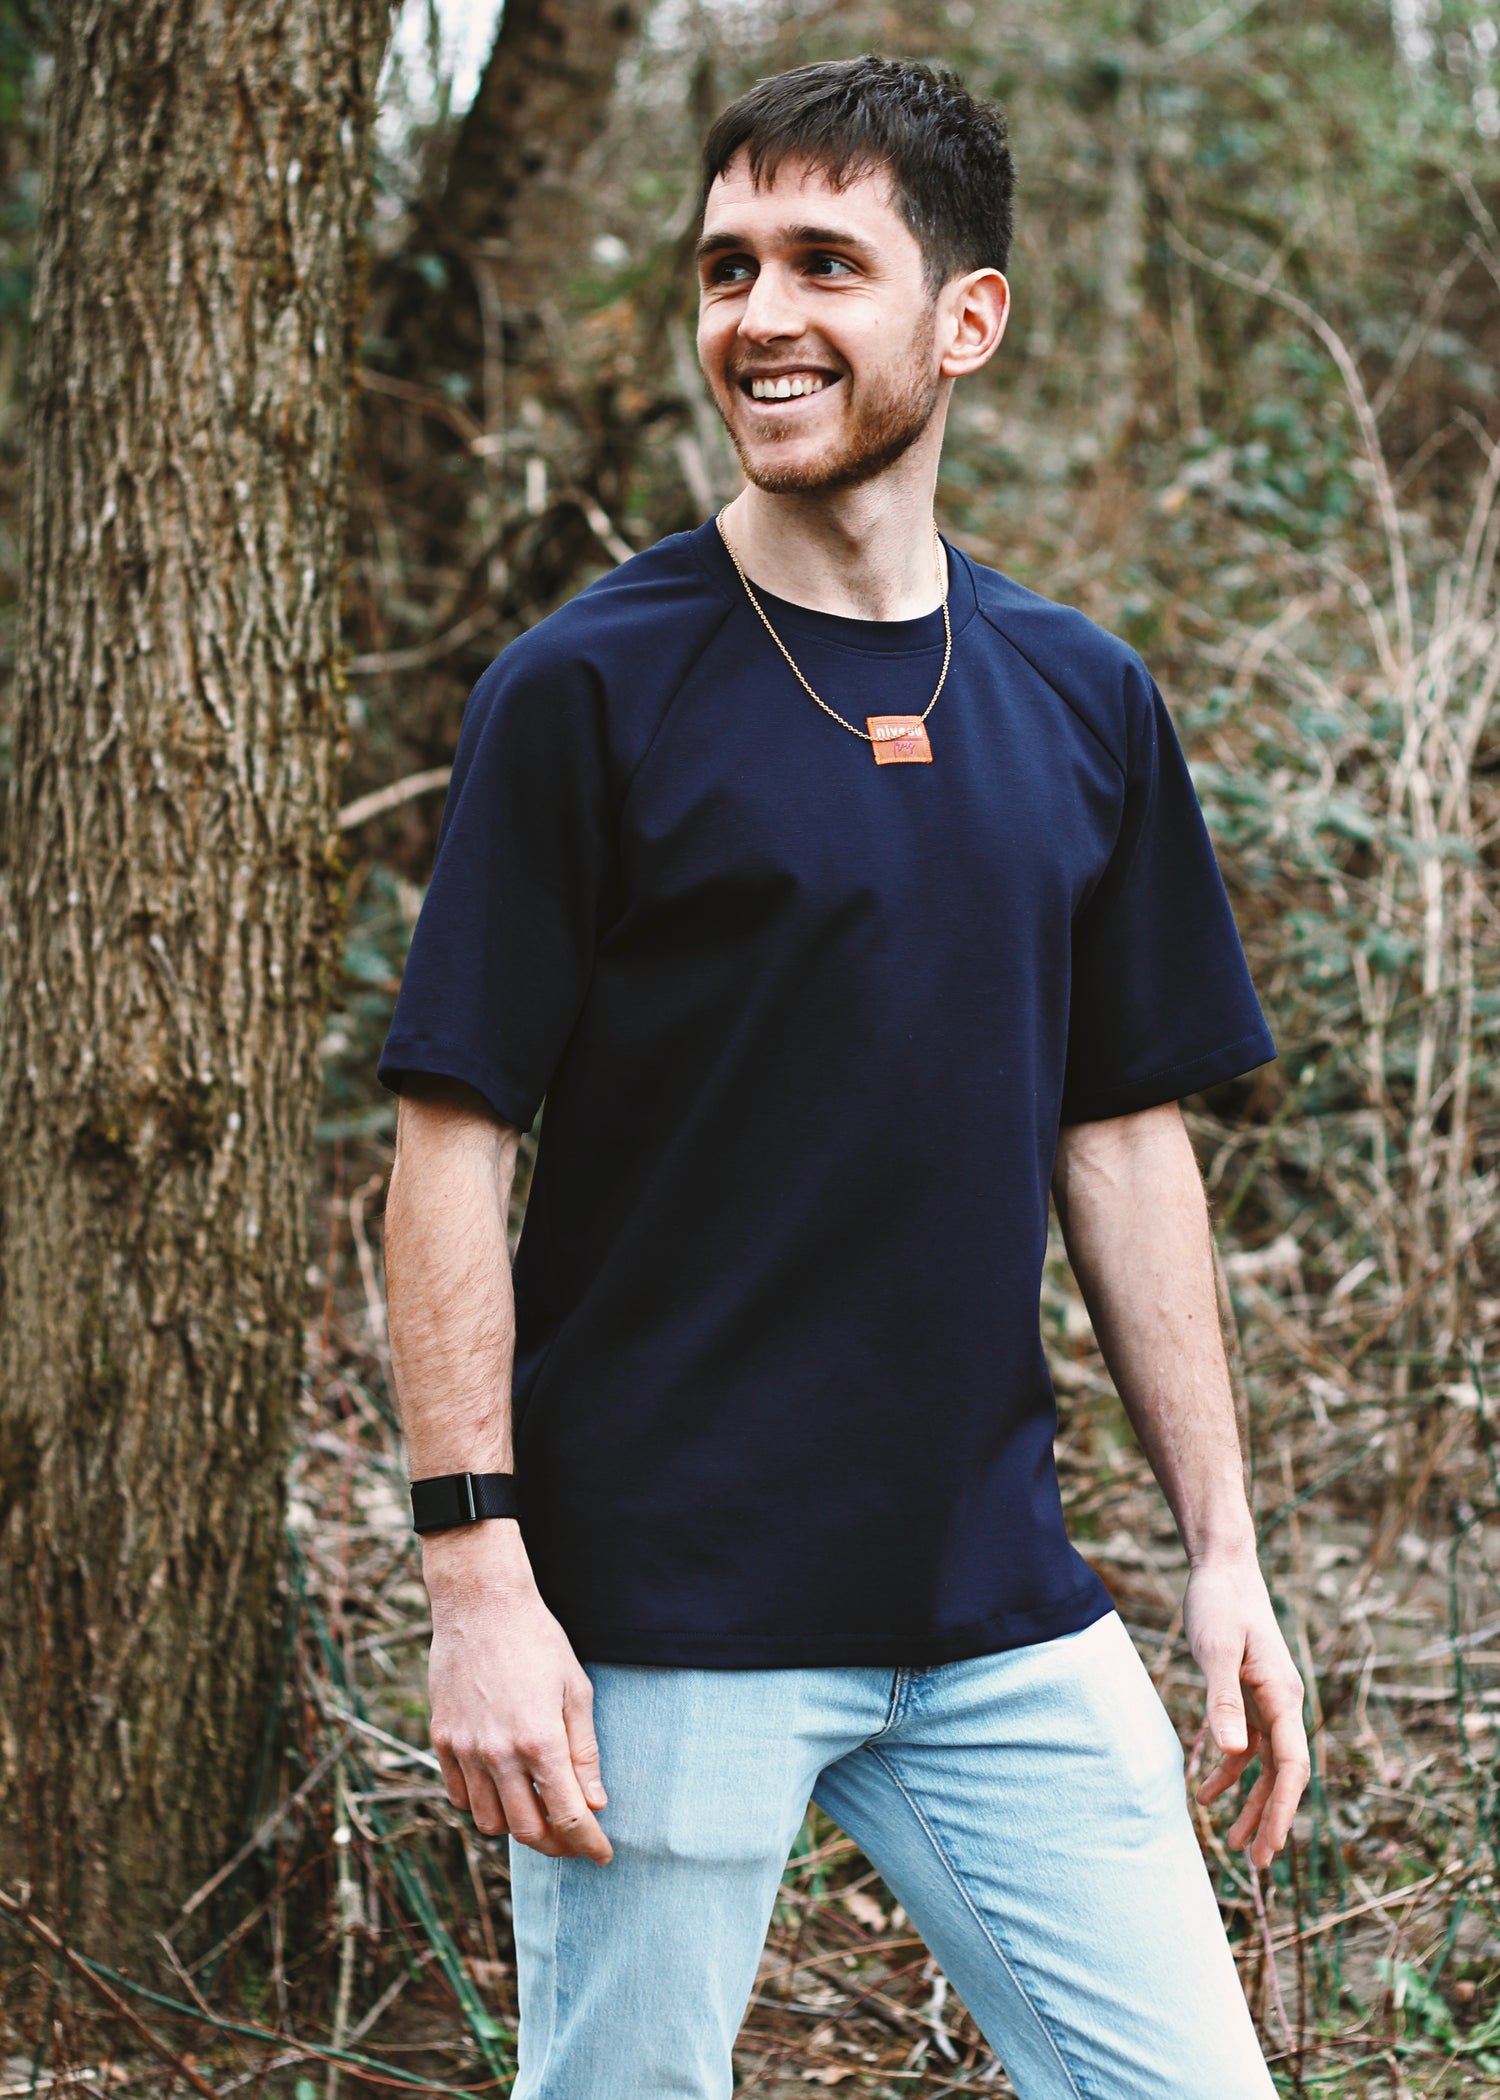 Homme souriant en forêt, portant le tshirt Dama marine.